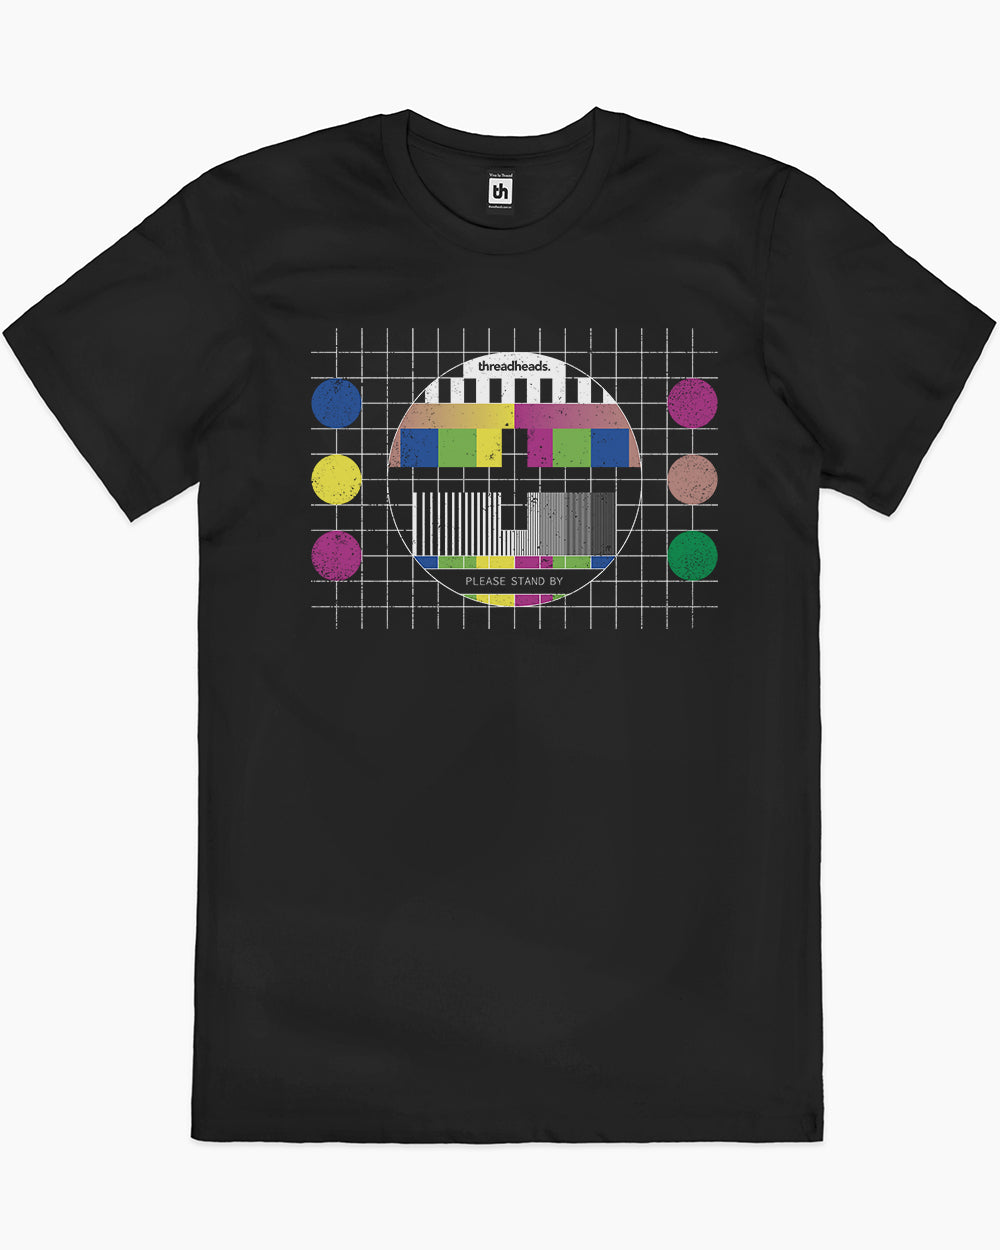 Threadheads: Cool T-Shirts Online